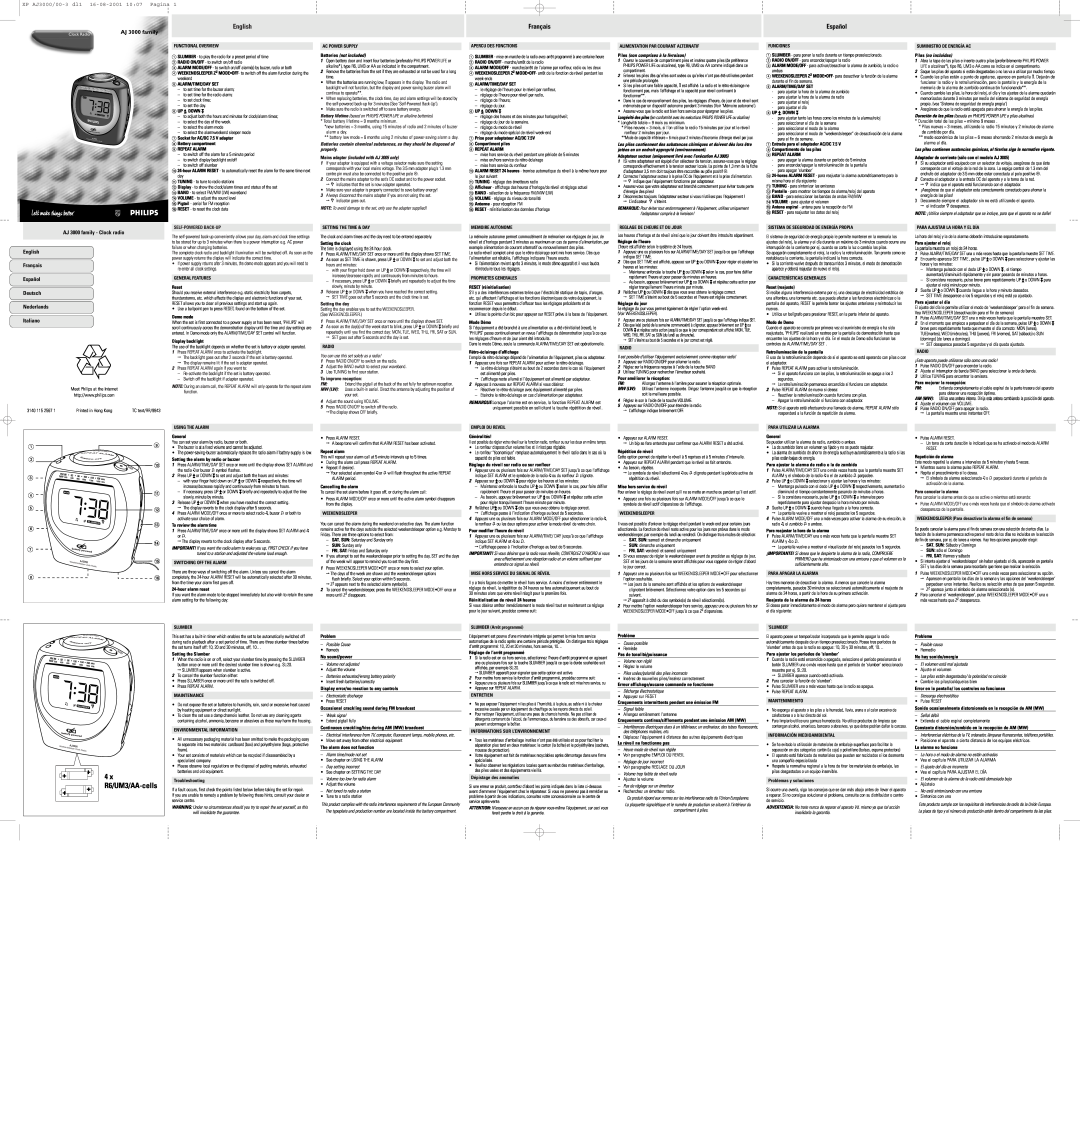 Philips AJ 3000 Family manual English, Français, Español, 4 x R6/UM3/AA-cells, XP AJ3000/00-3 dl1 16-08-2001 1007 Pagina 